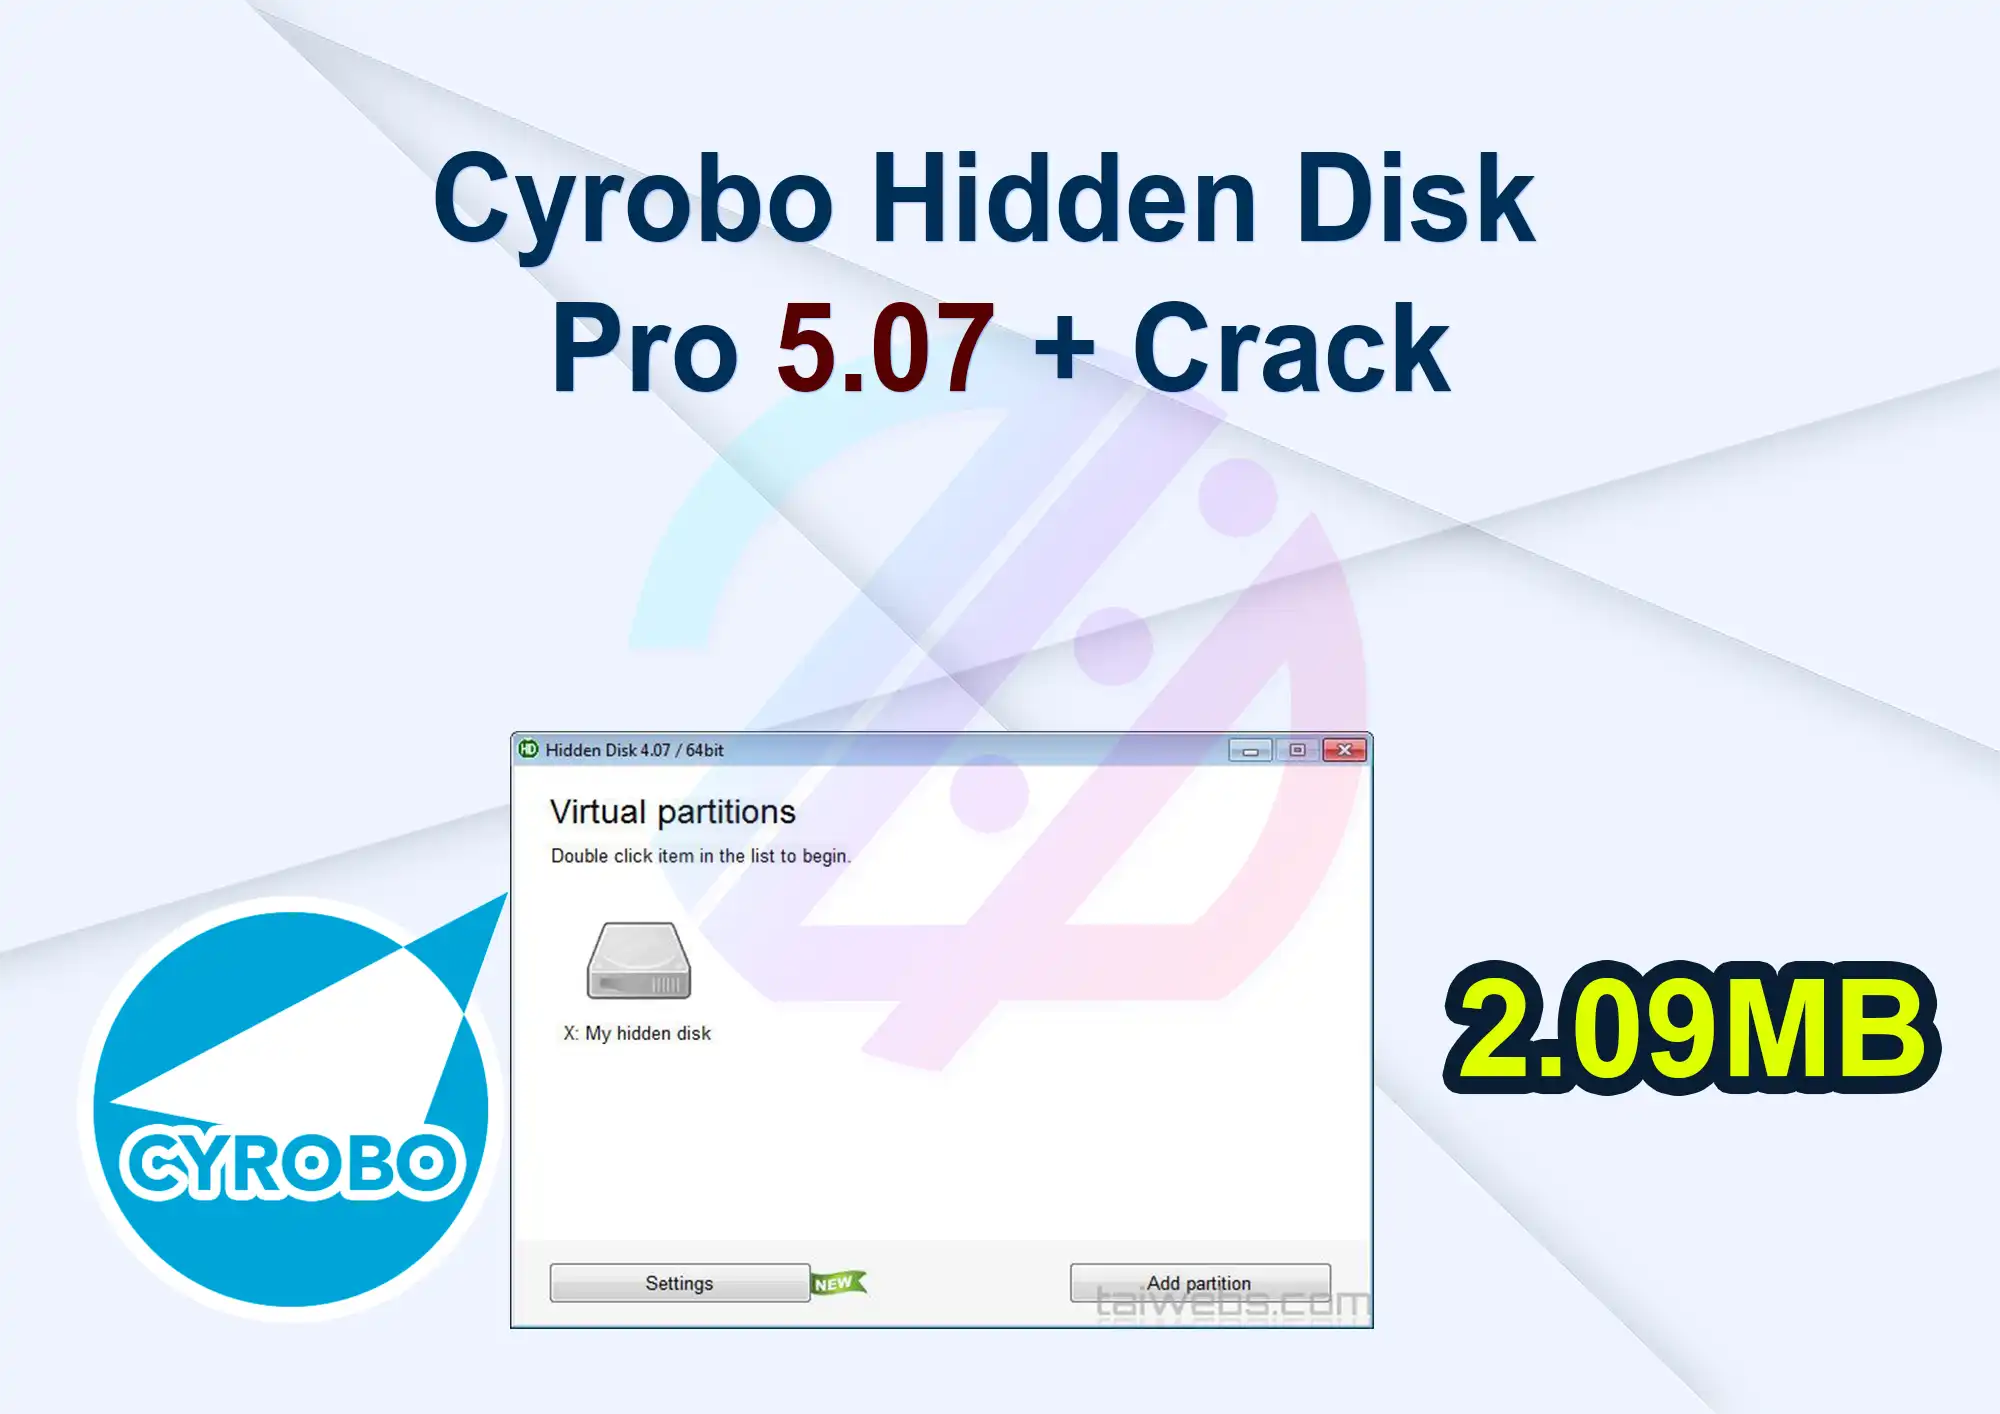 Cyrobo Hidden Disk Pro 5.07 + Crack